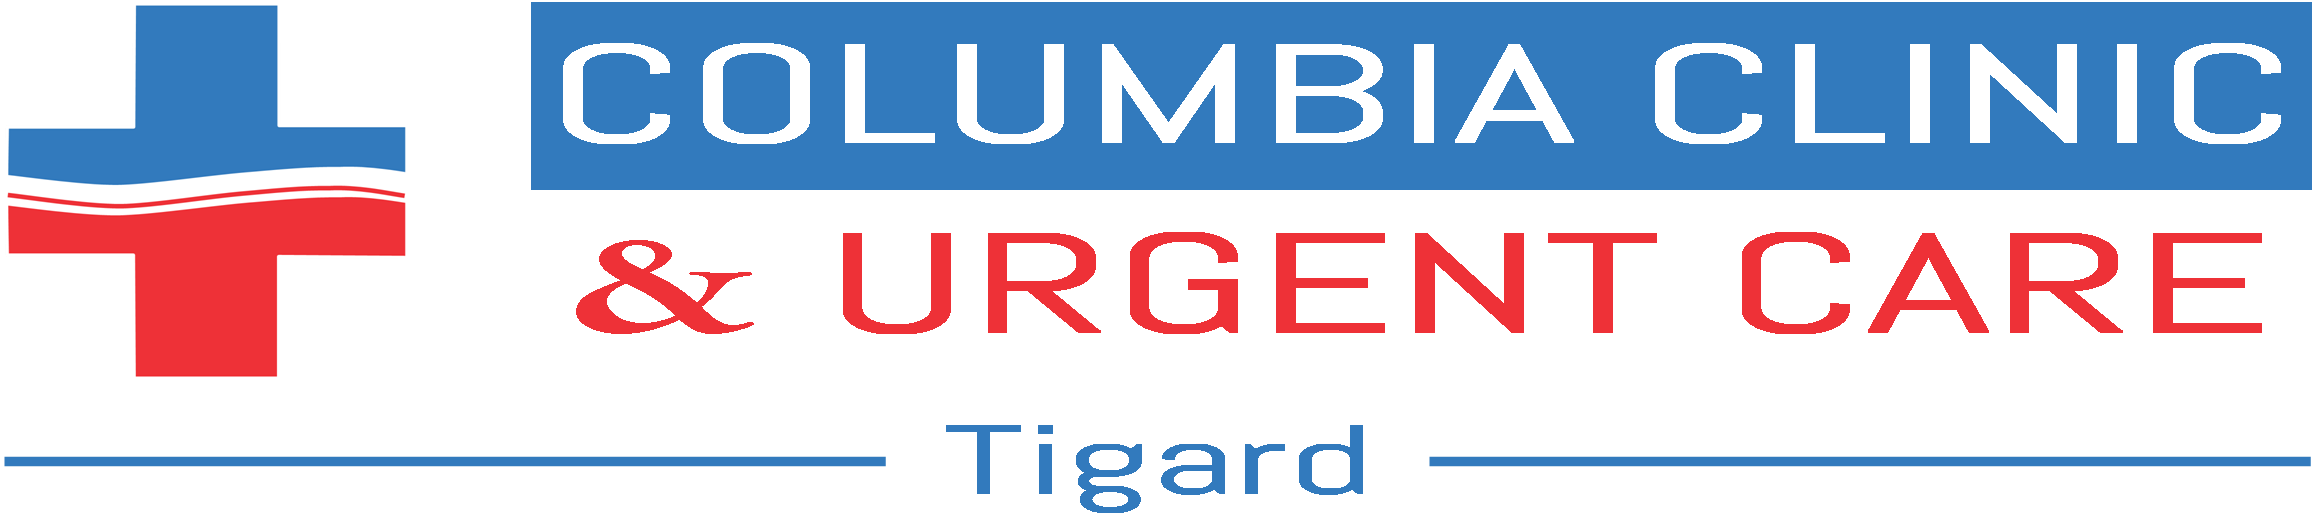 Columbia Clinic Urgent Care - Tigard Logo